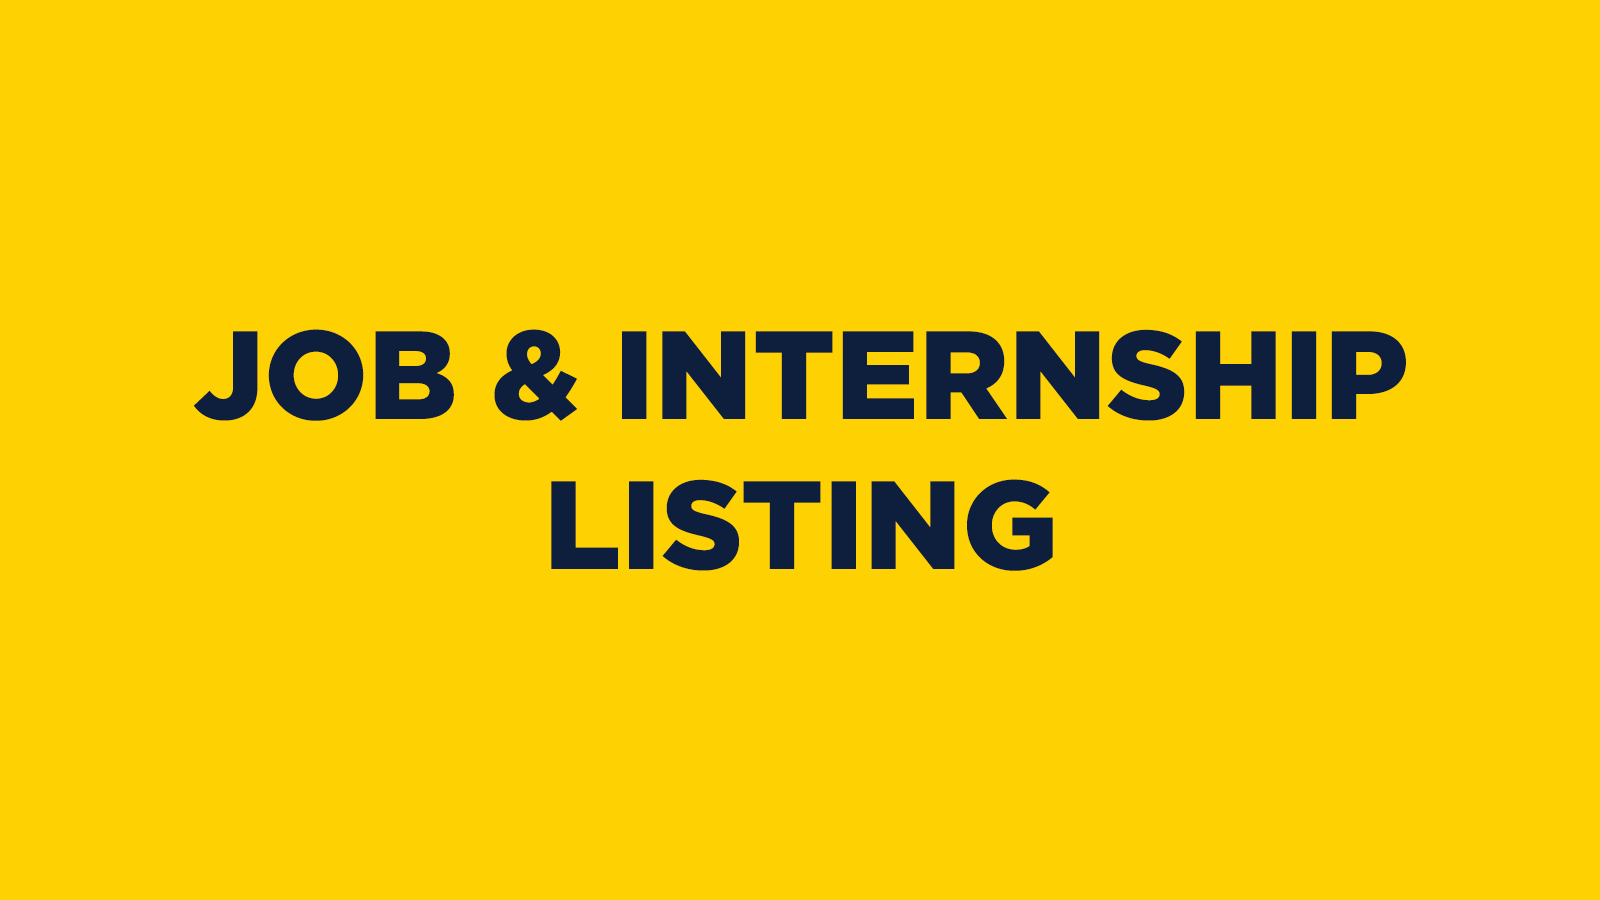 Job & Internship Listing